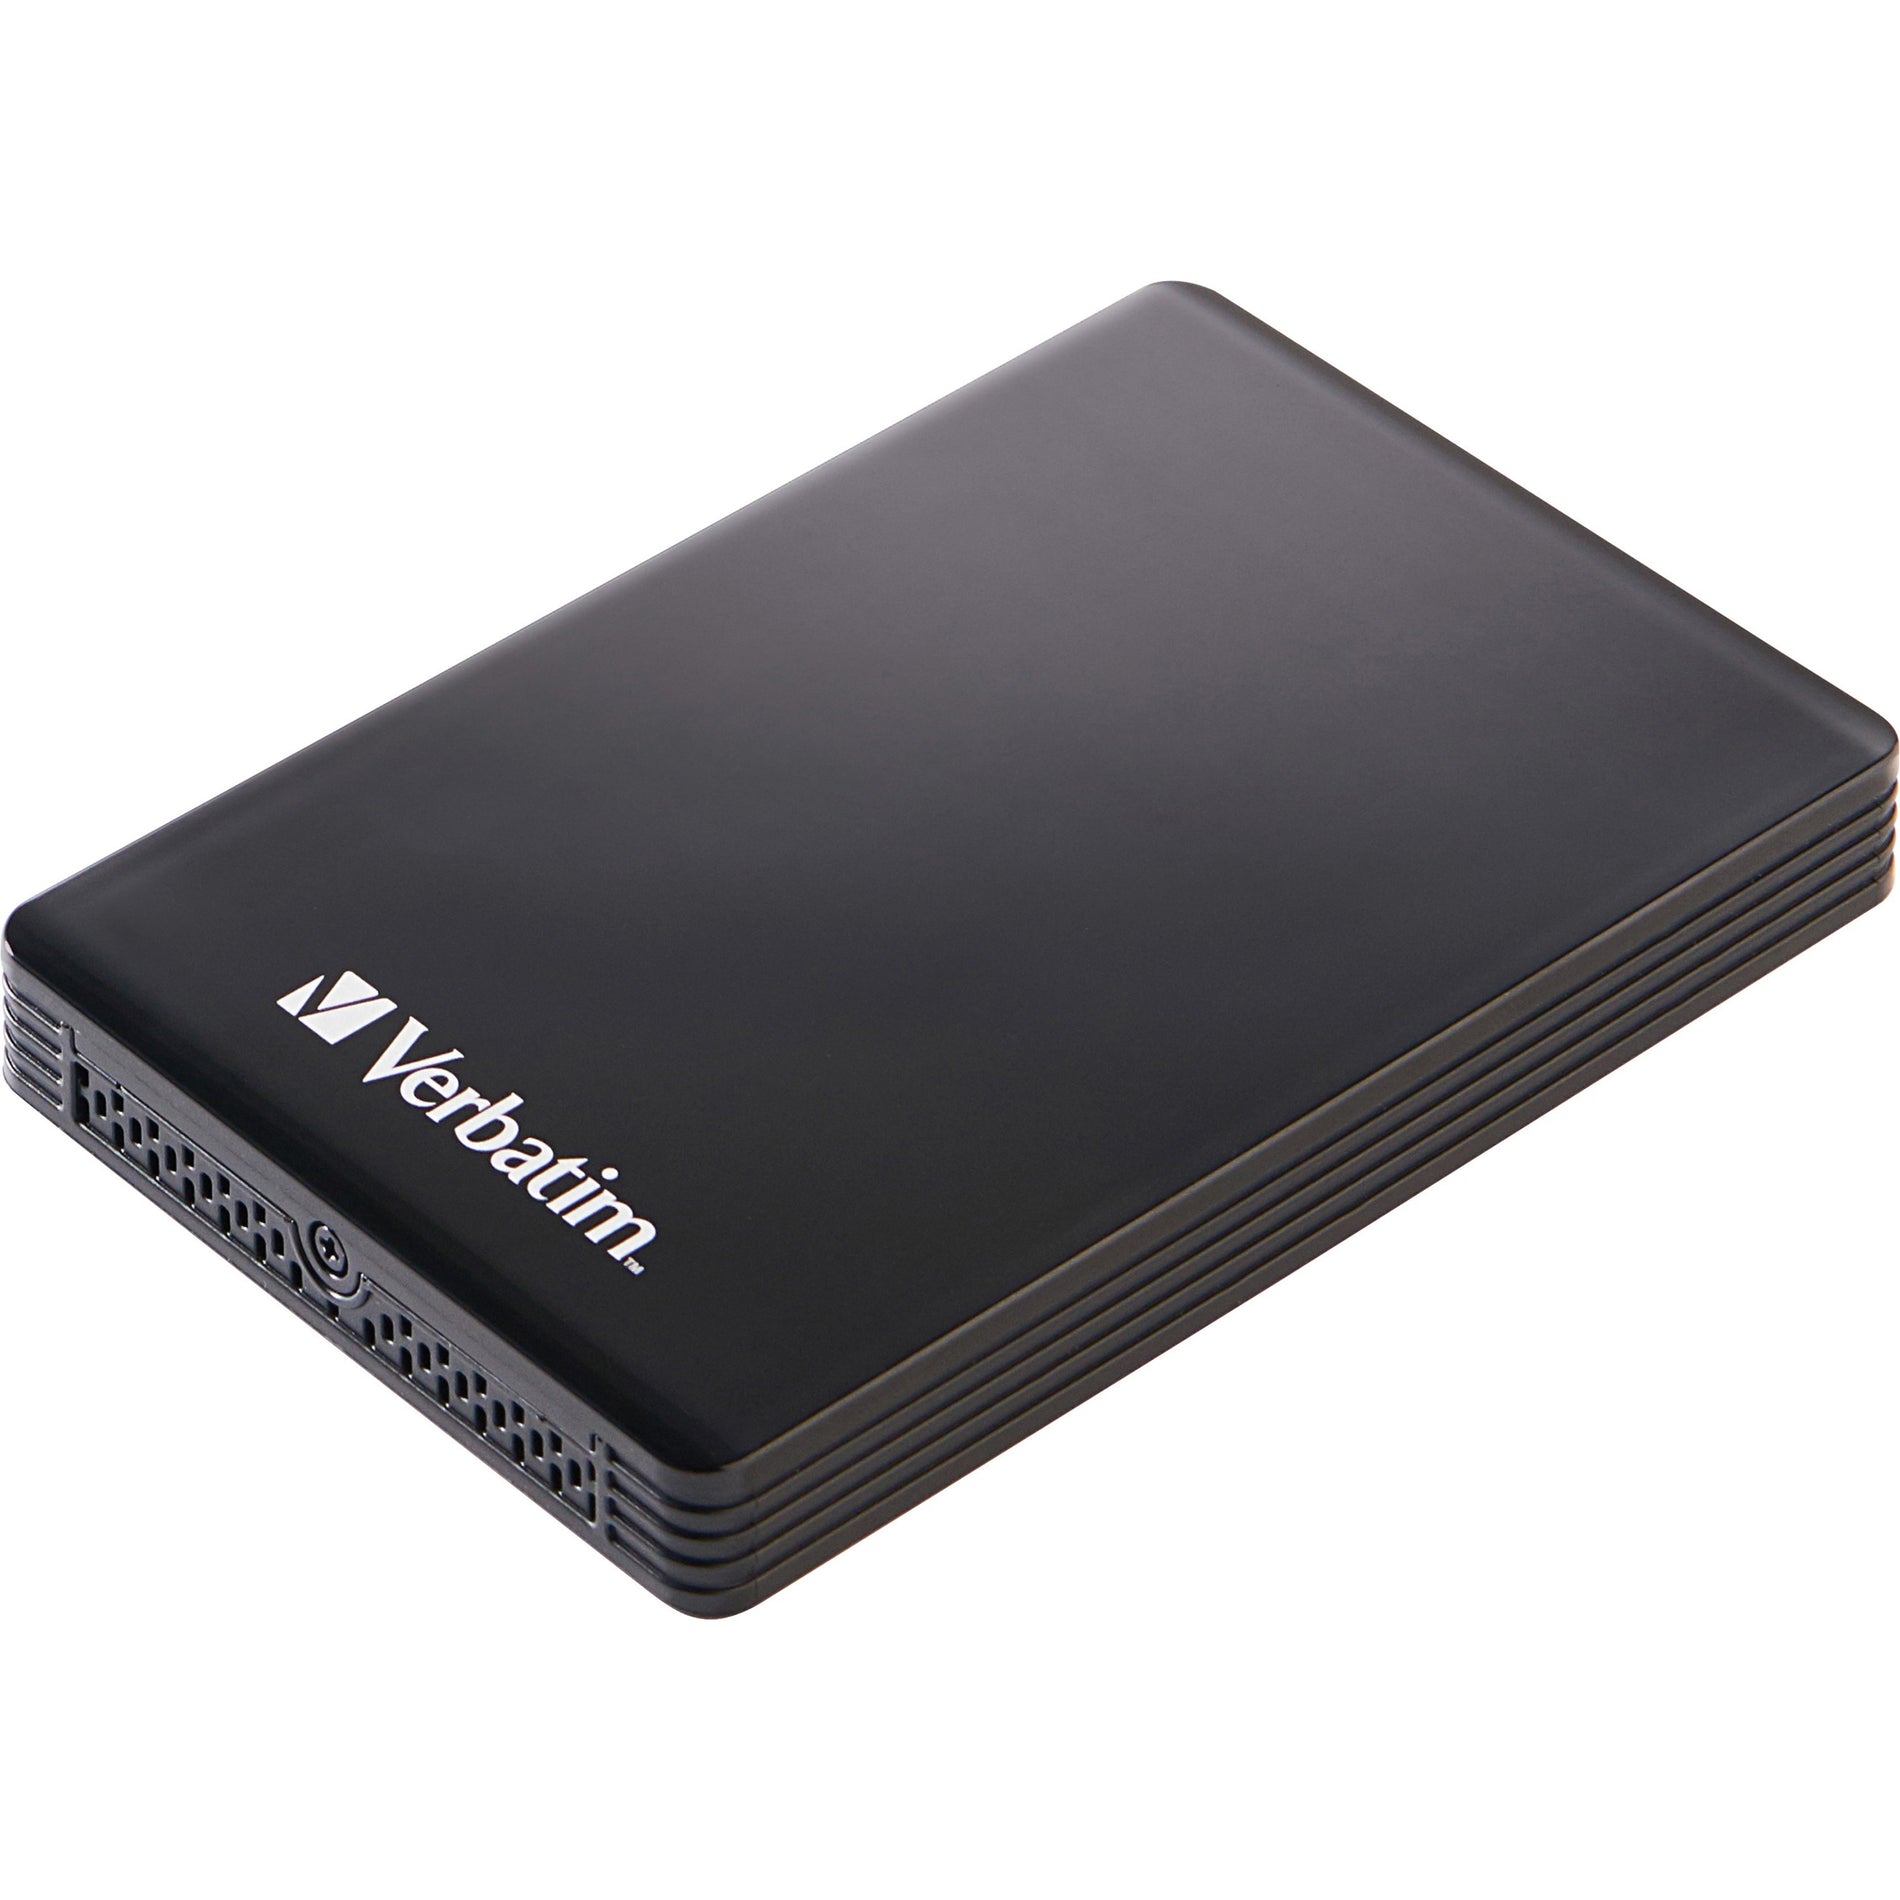 Verbatim 70383 Vx460 External SSD, USB 3.1 Gen 1 - Black, 512GB